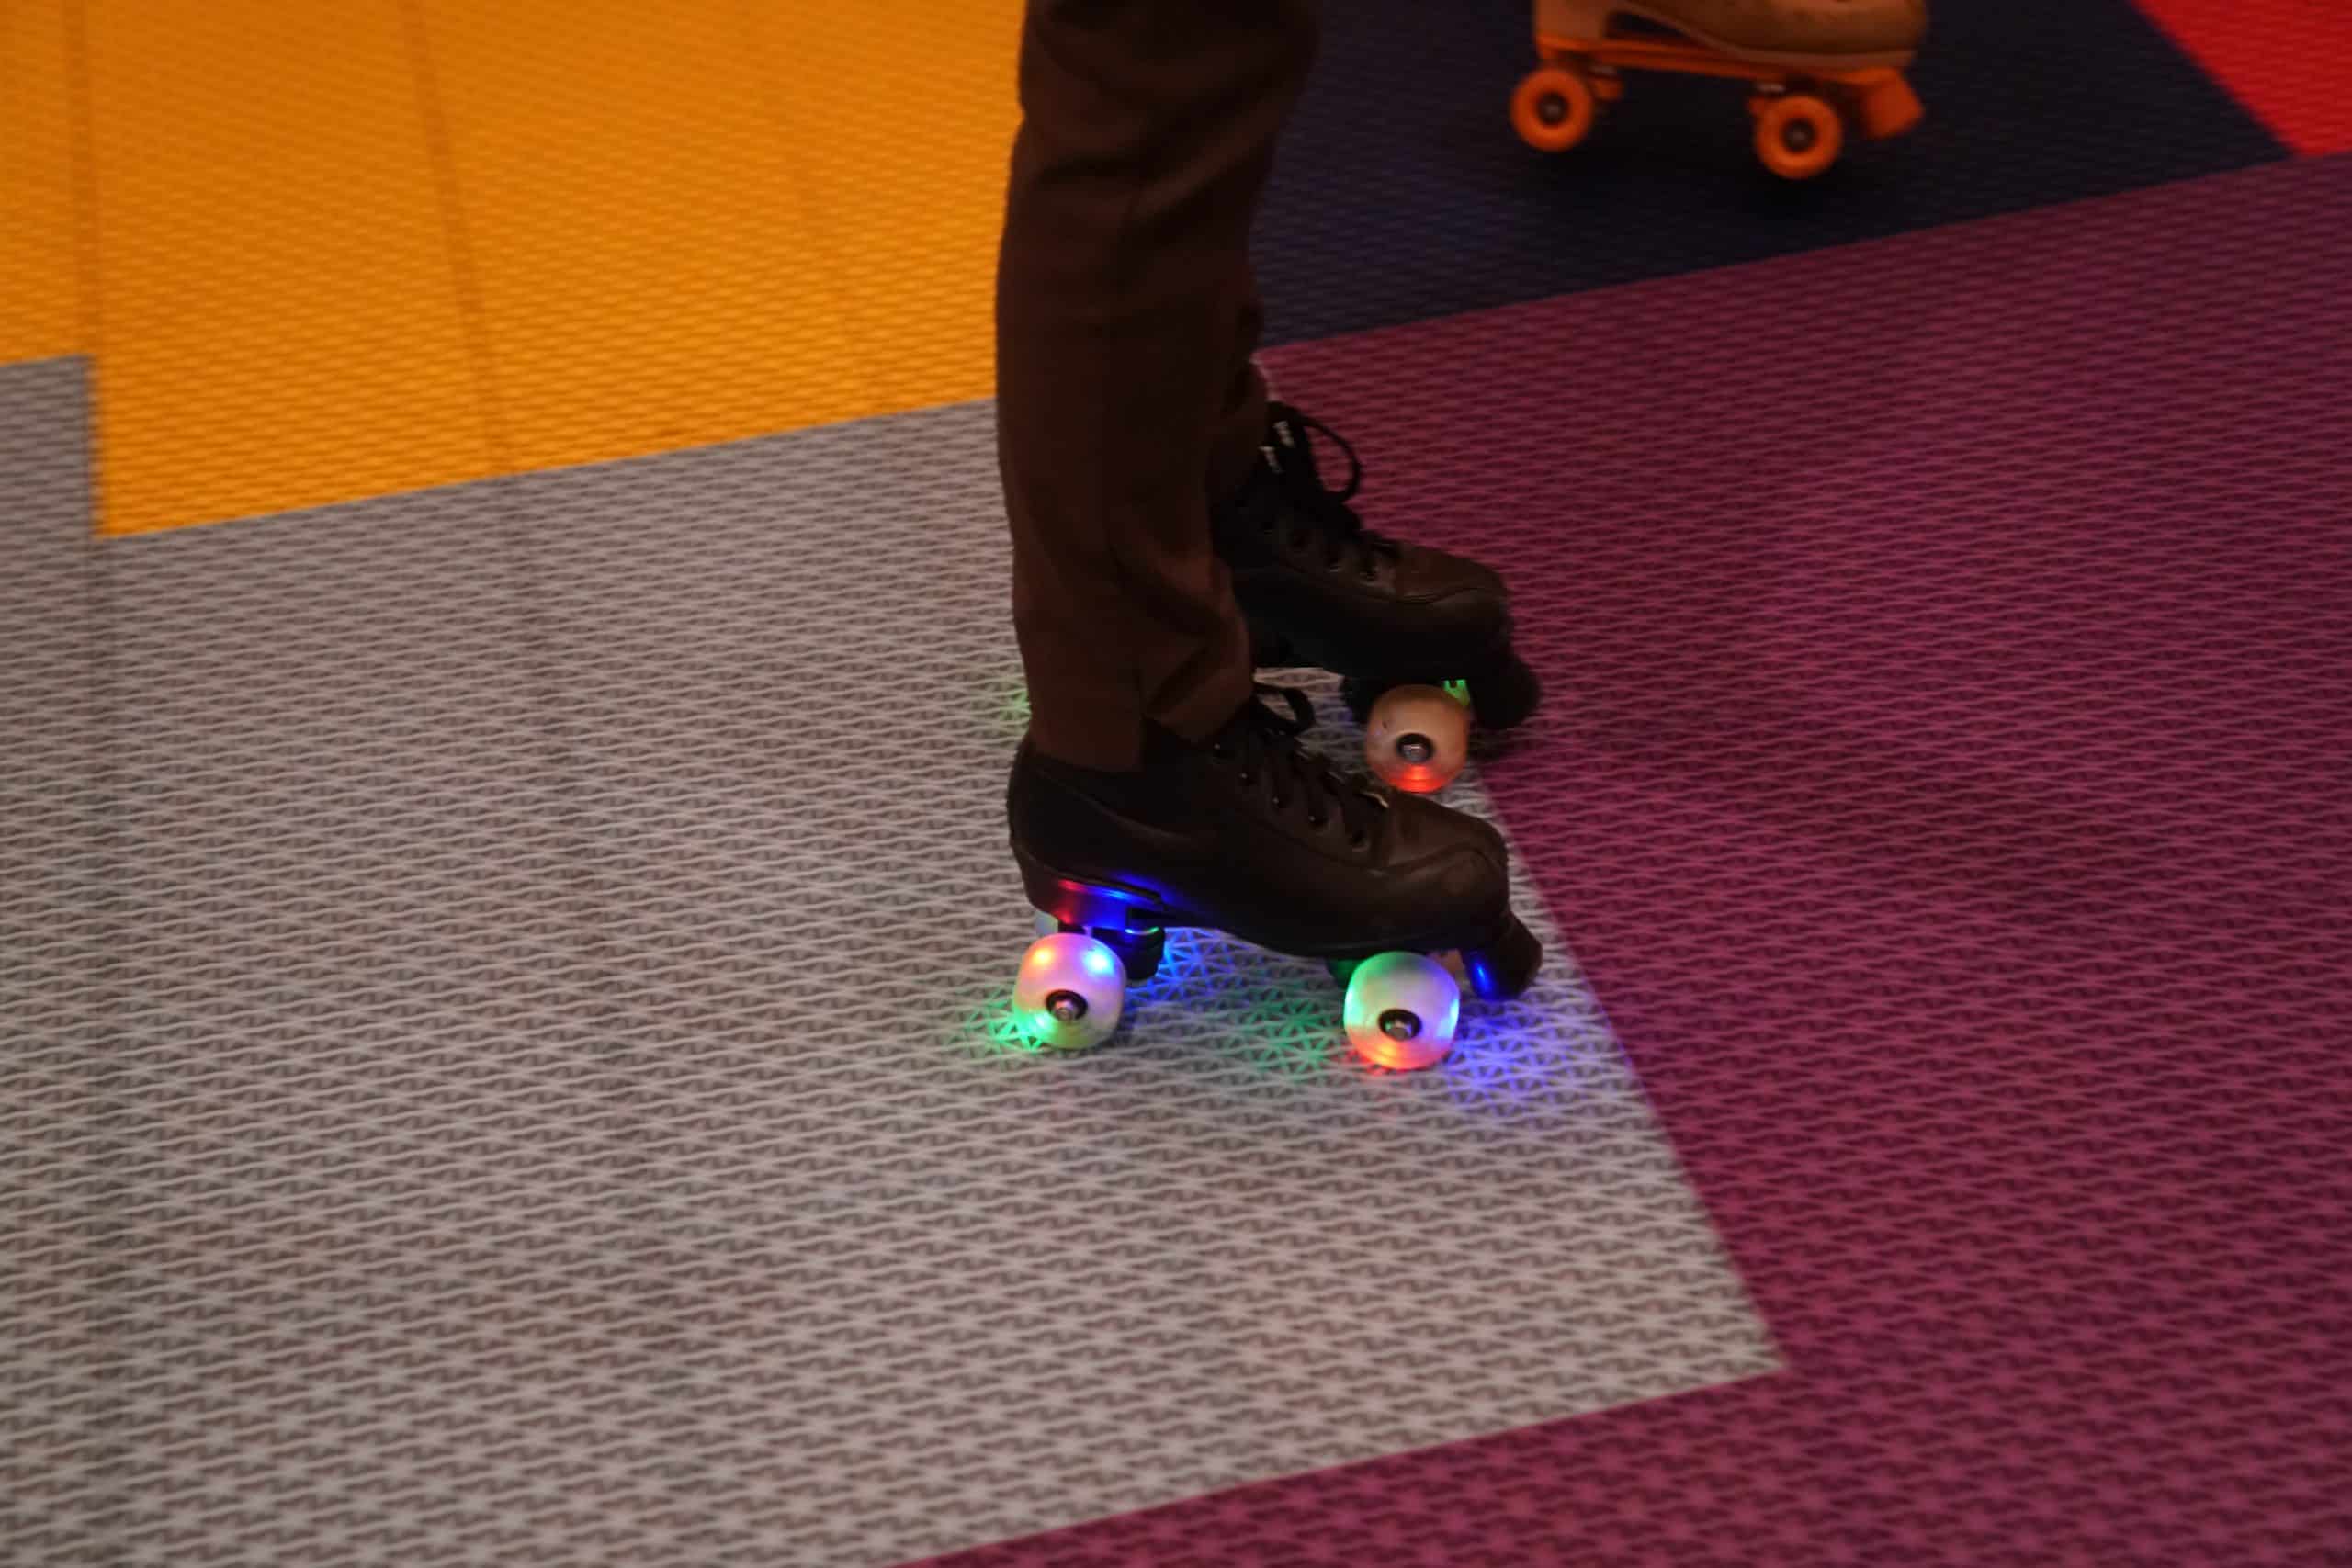 Roller skates with LED light-up wheels